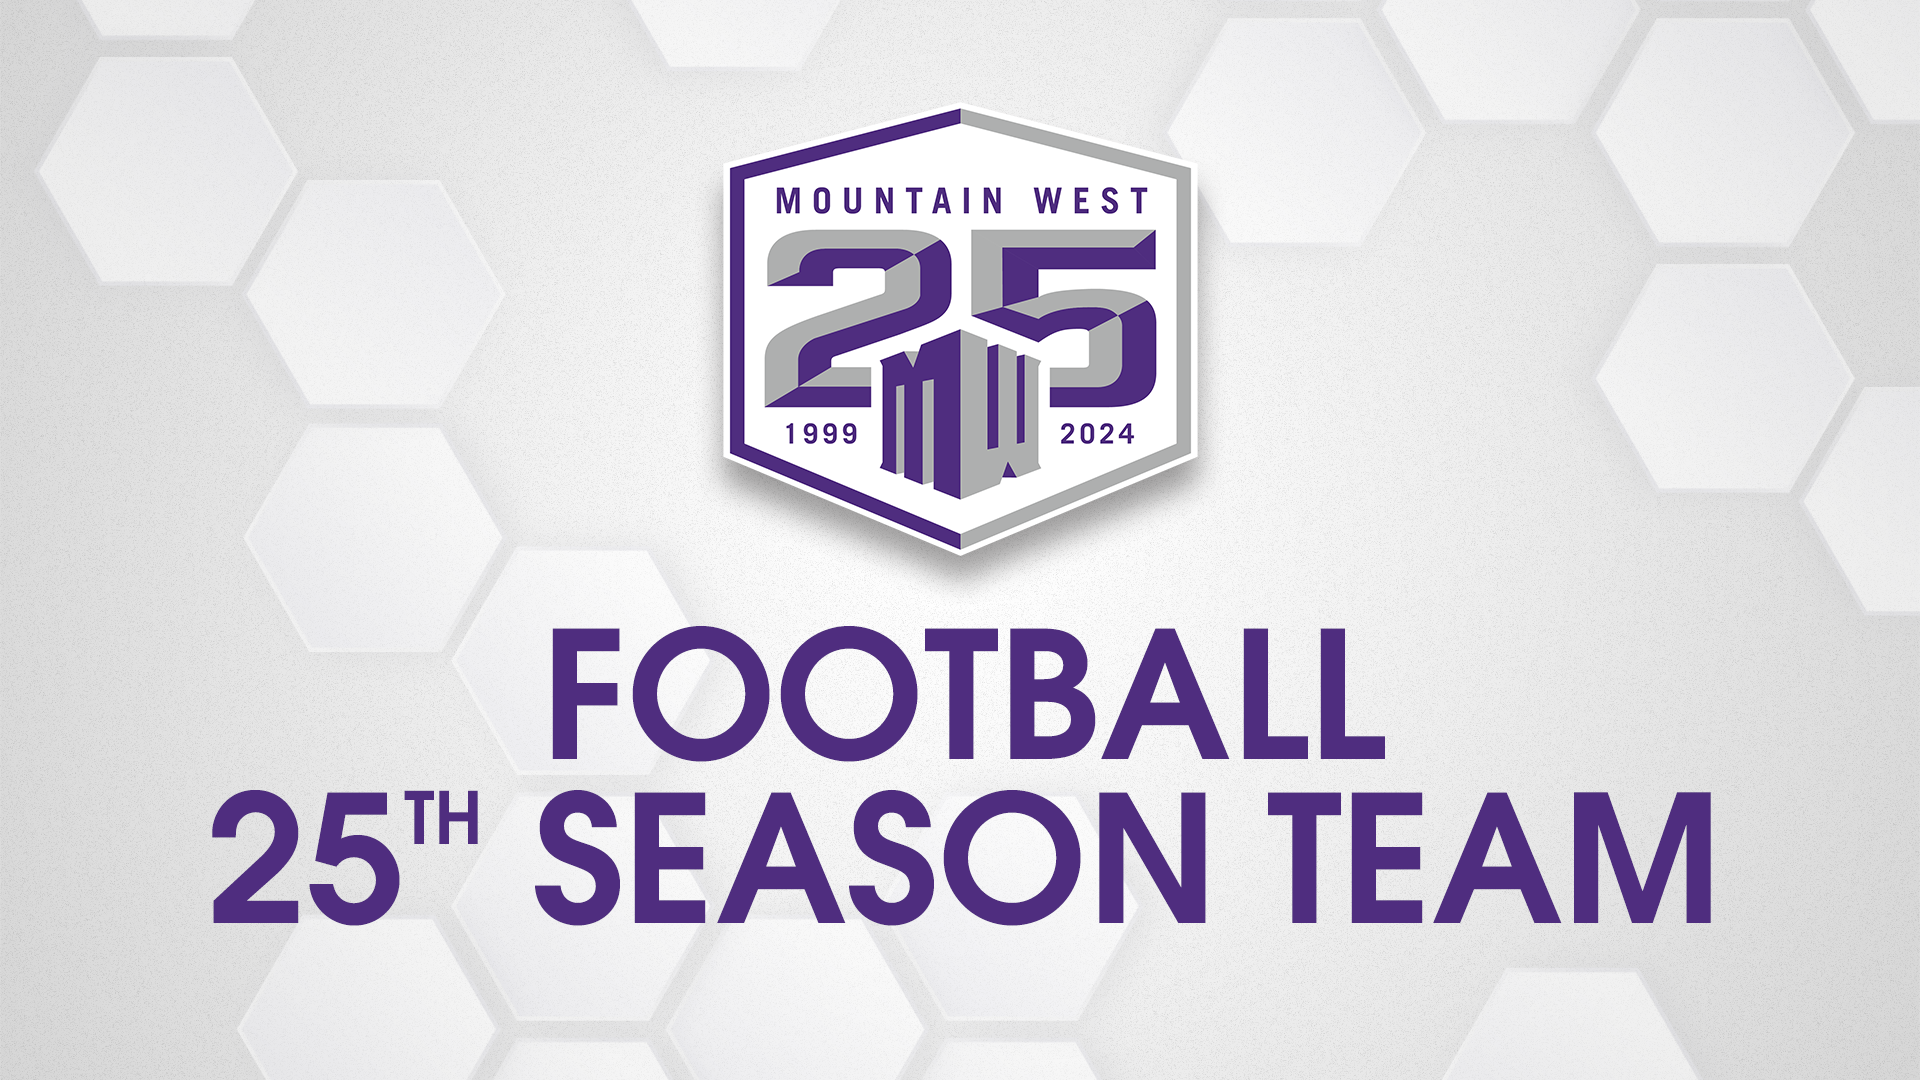 Mountain West Announces 25th Season Football Team